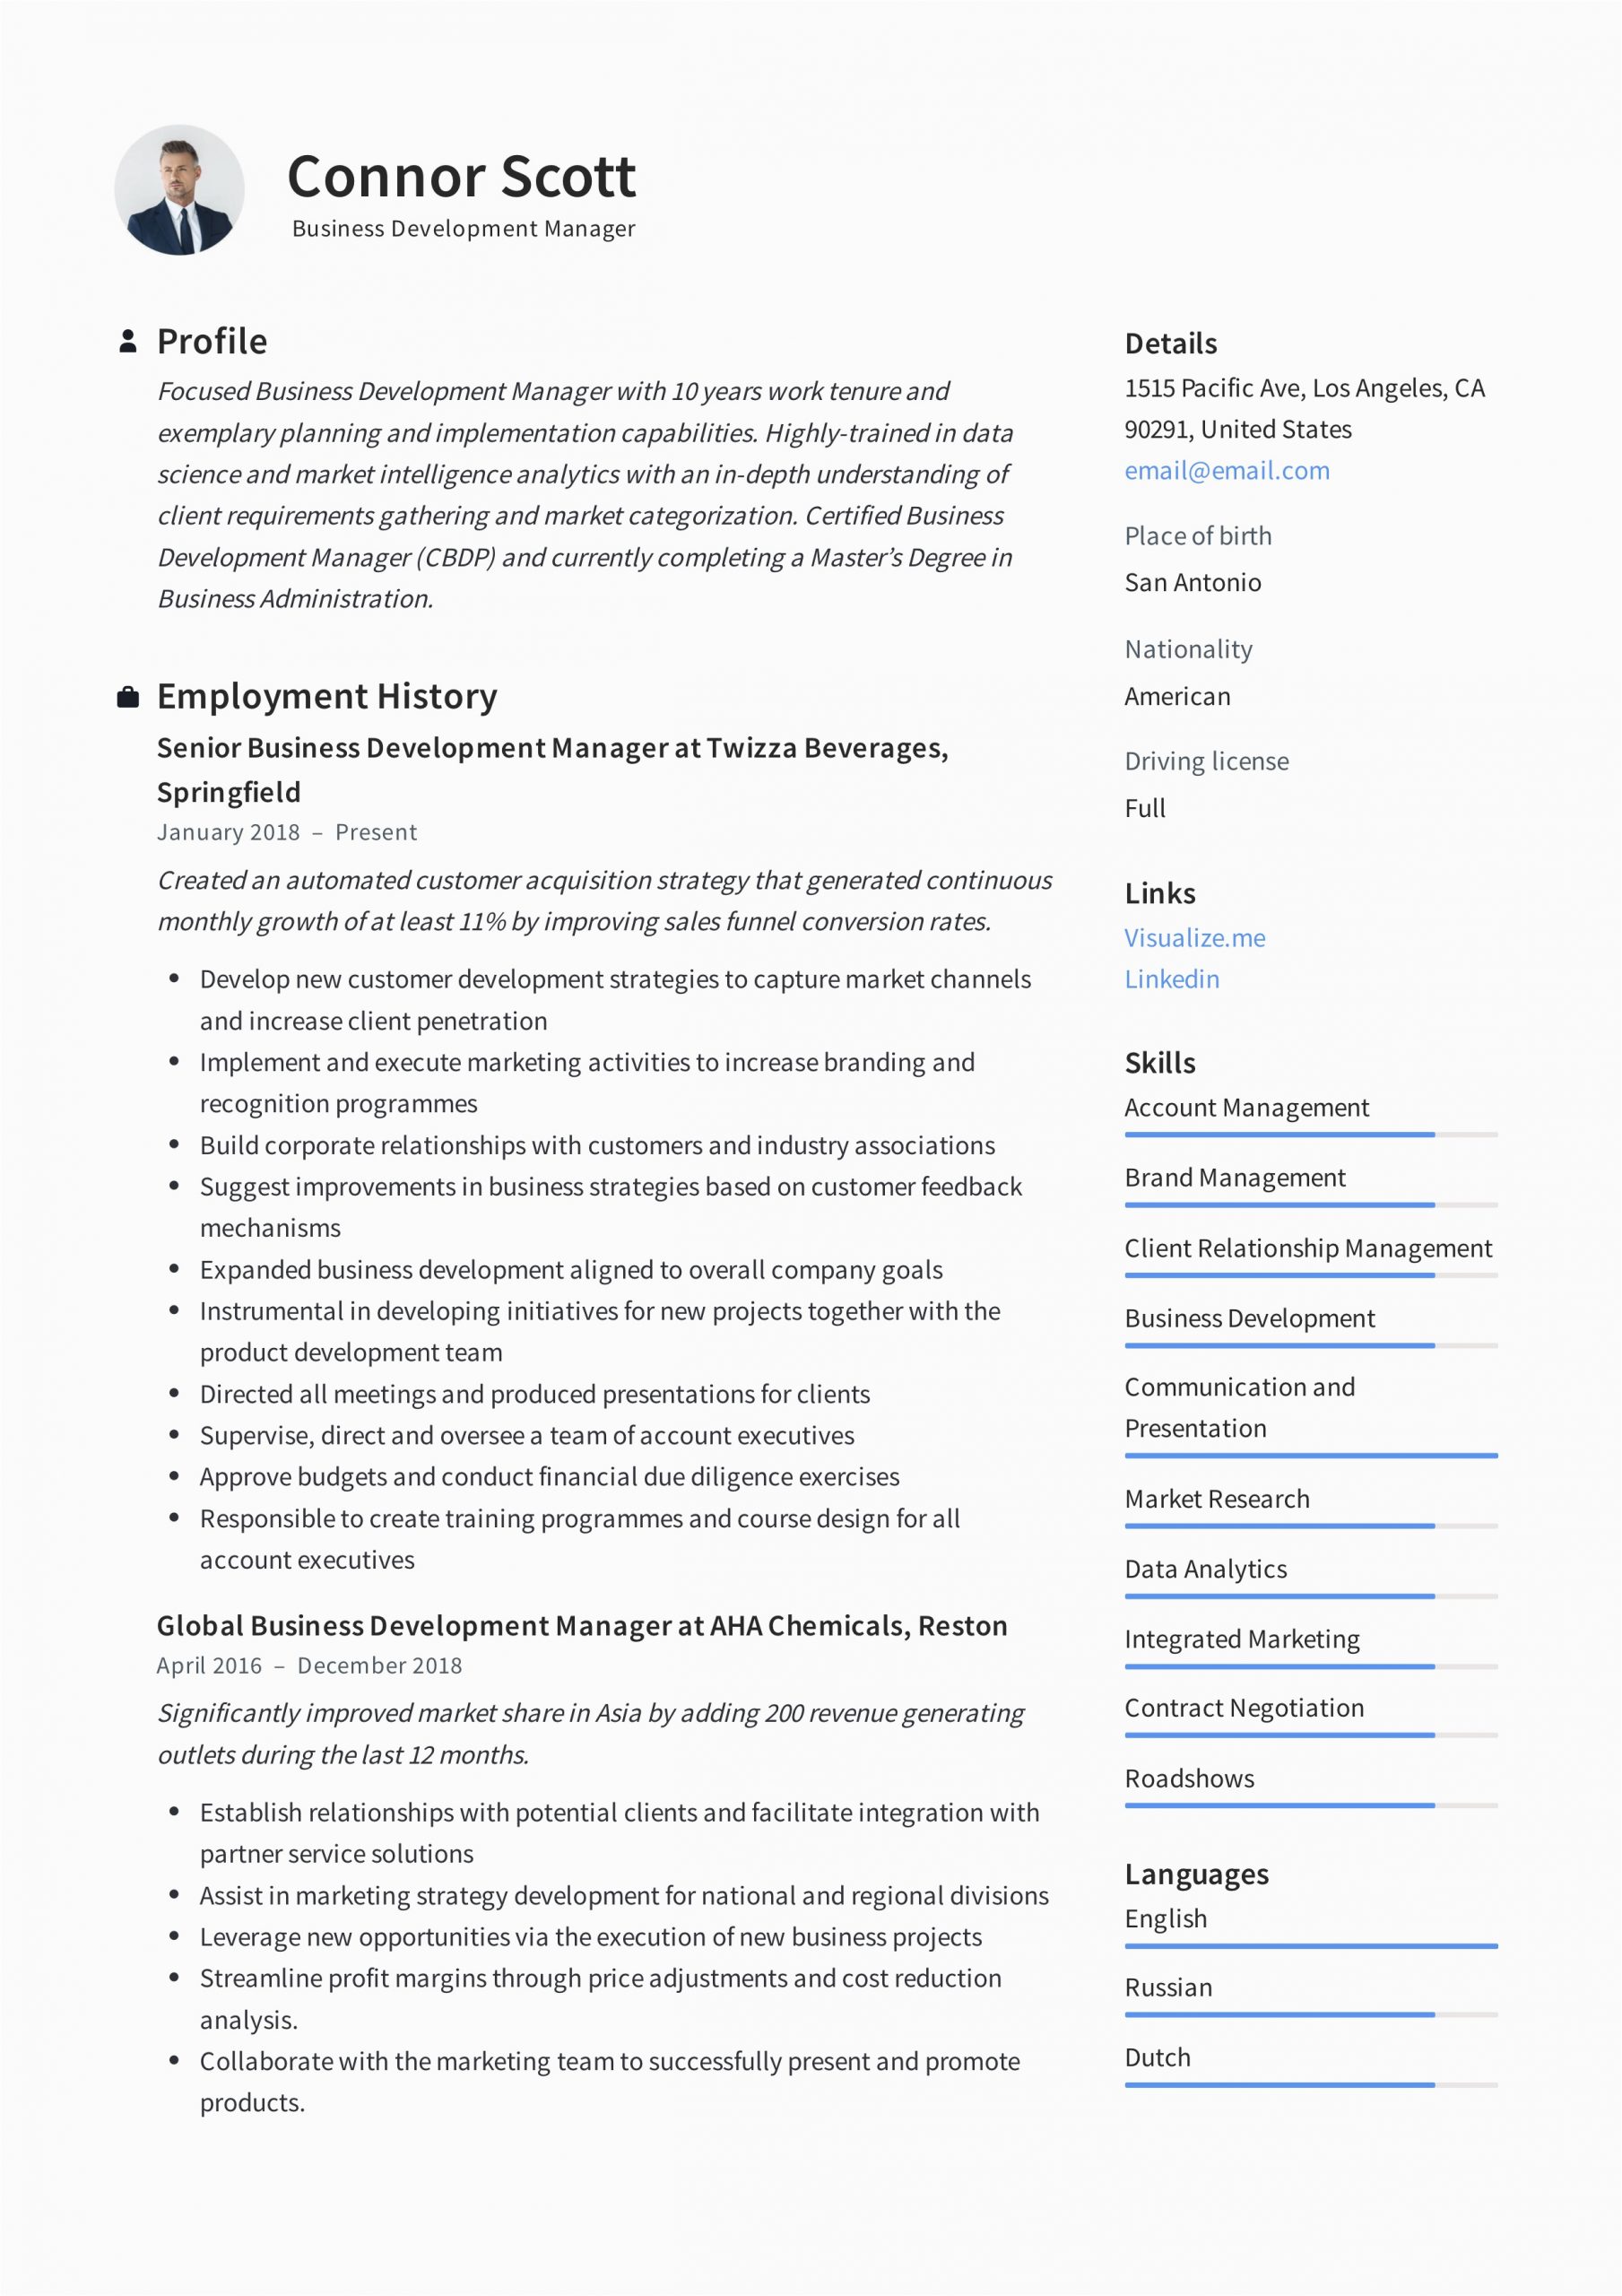 Resume Template for Business Development Manager Business Development Manager Resume & Guide